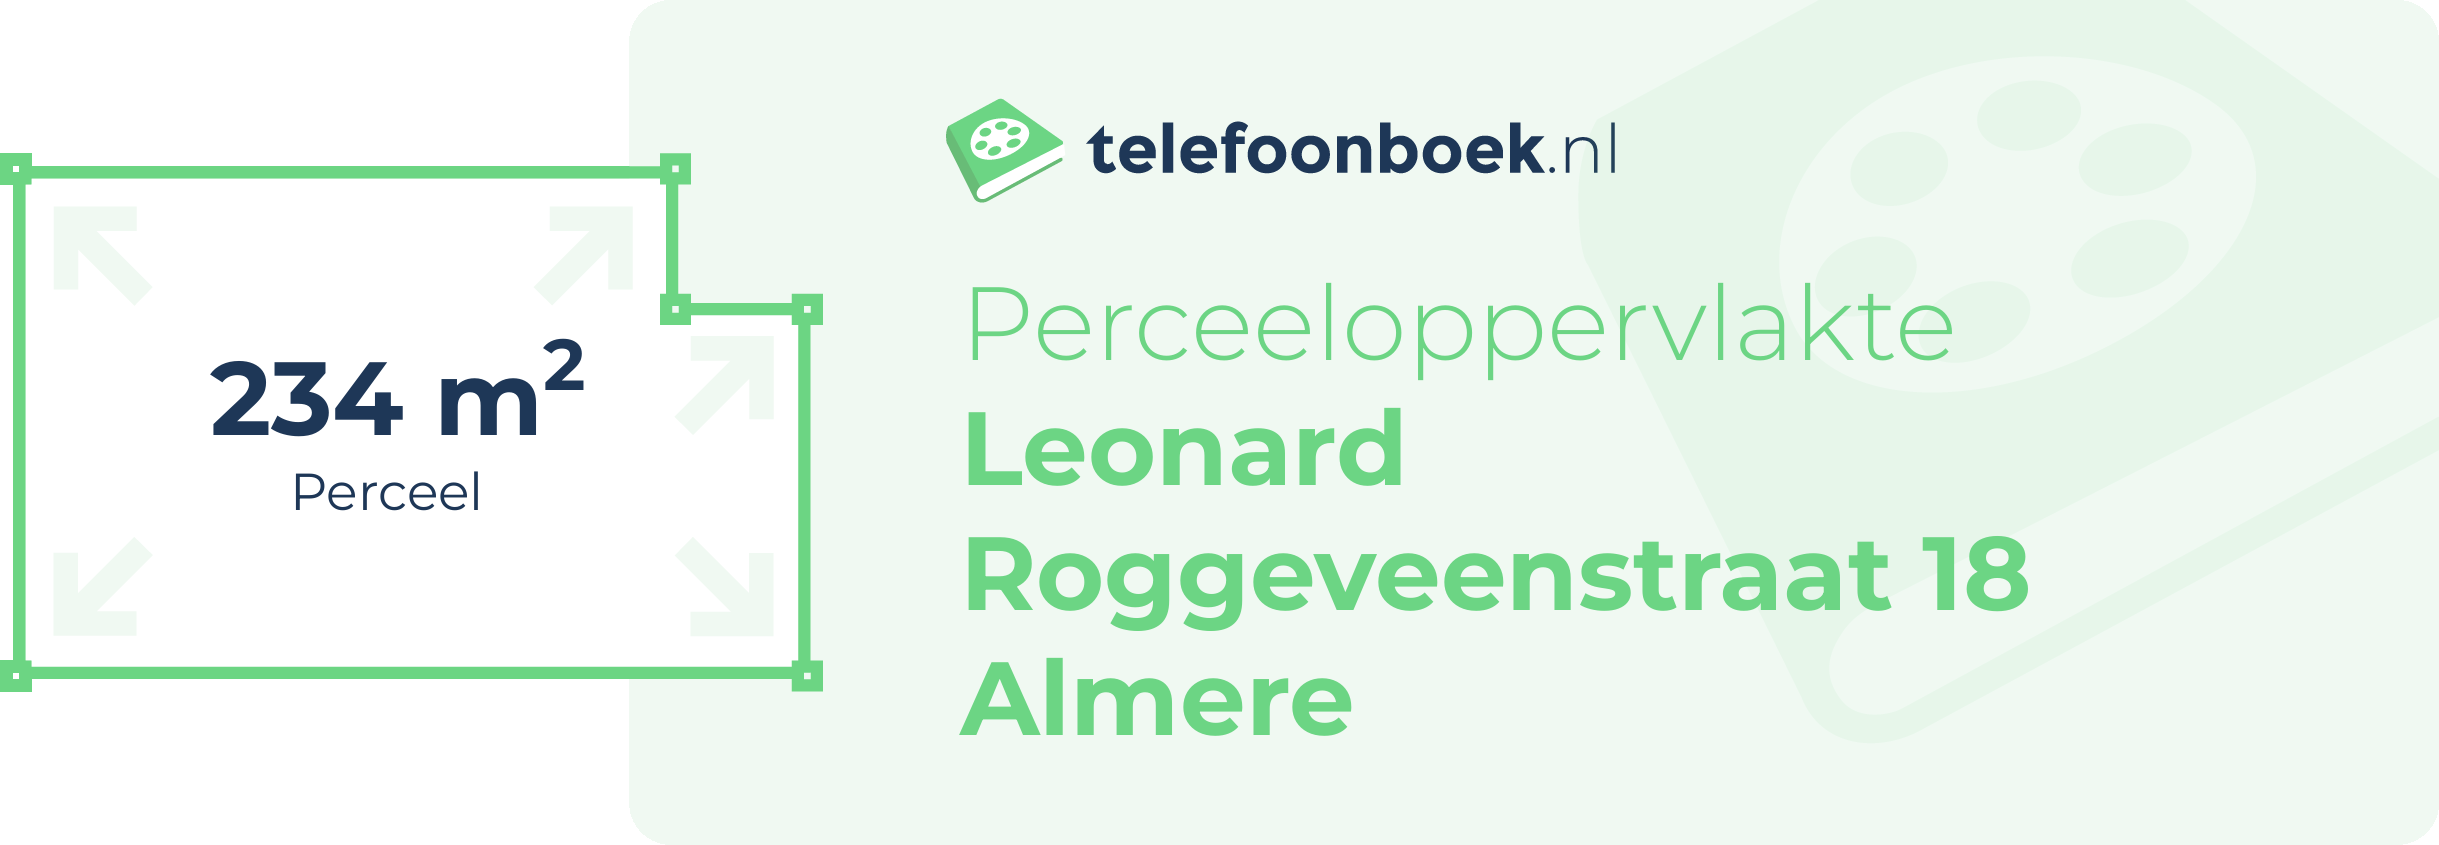 Perceeloppervlakte Leonard Roggeveenstraat 18 Almere